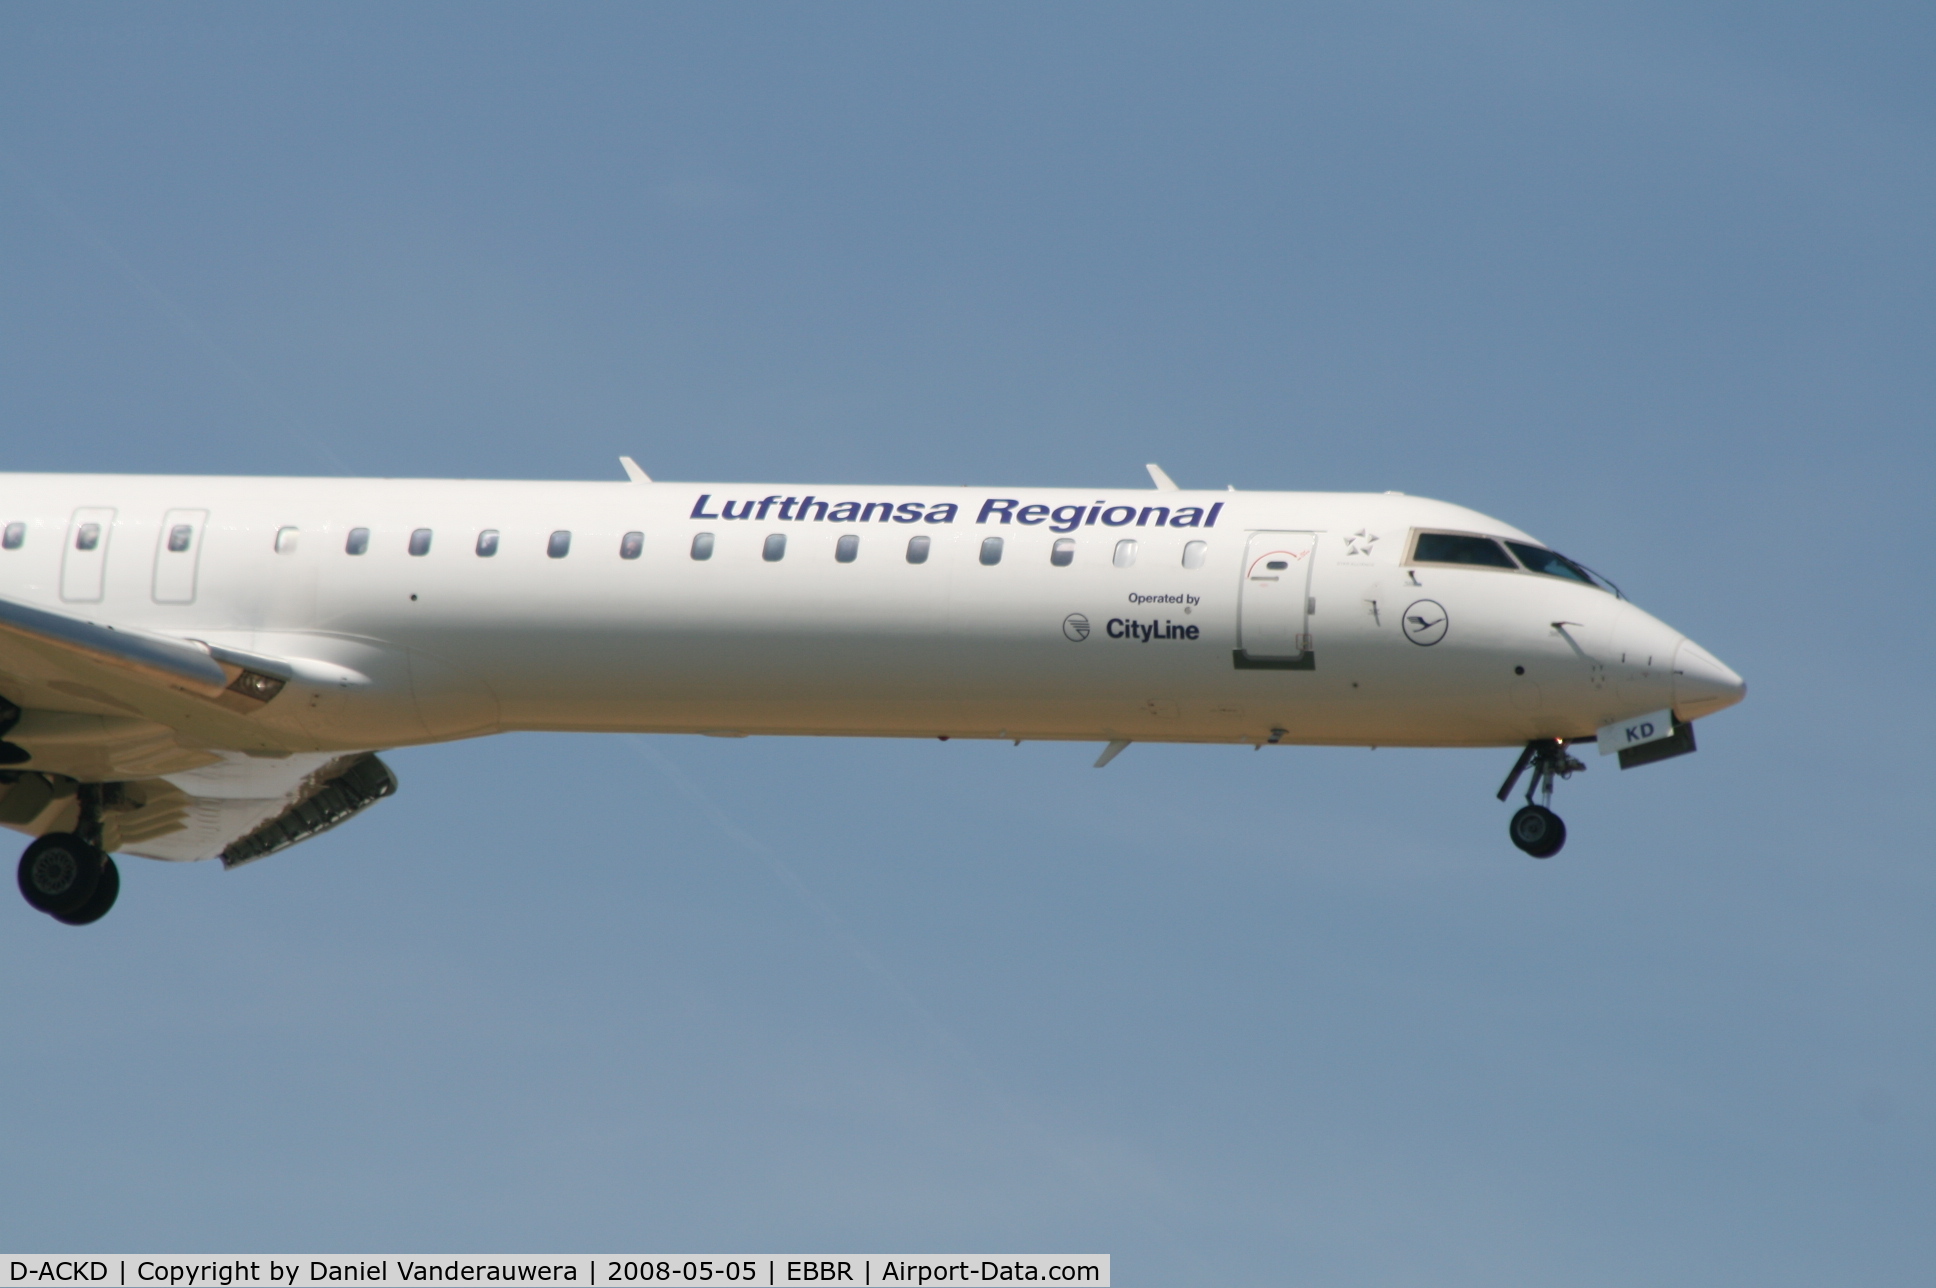 D-ACKD, 2006 Bombardier CRJ-900LR (CL-600-2D24) C/N 15080, flight LH4604 is descending to rwy 02